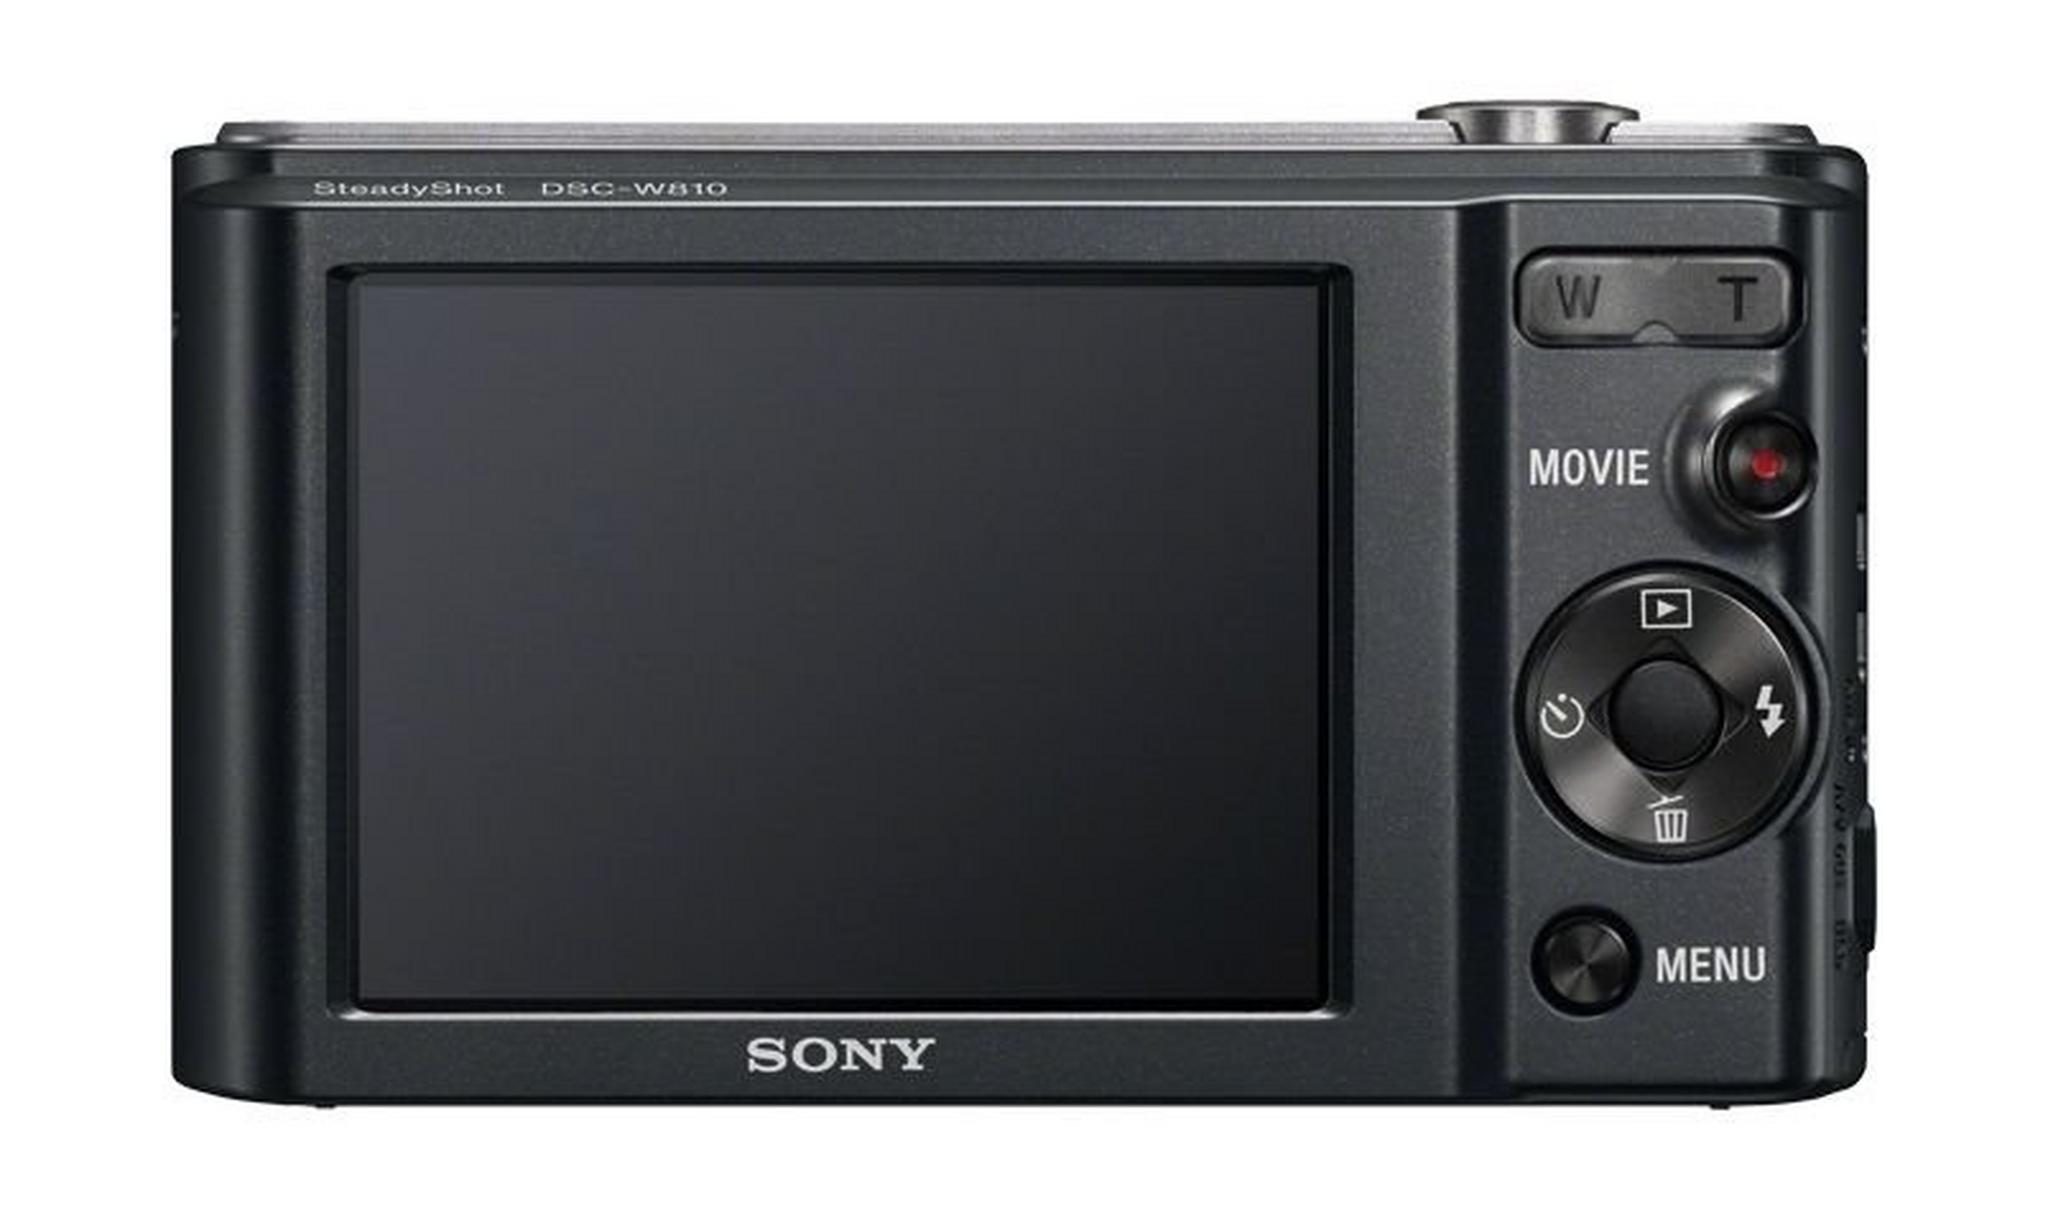 Sony Cyber-Shot DSC-W810 Compact Camera - Black